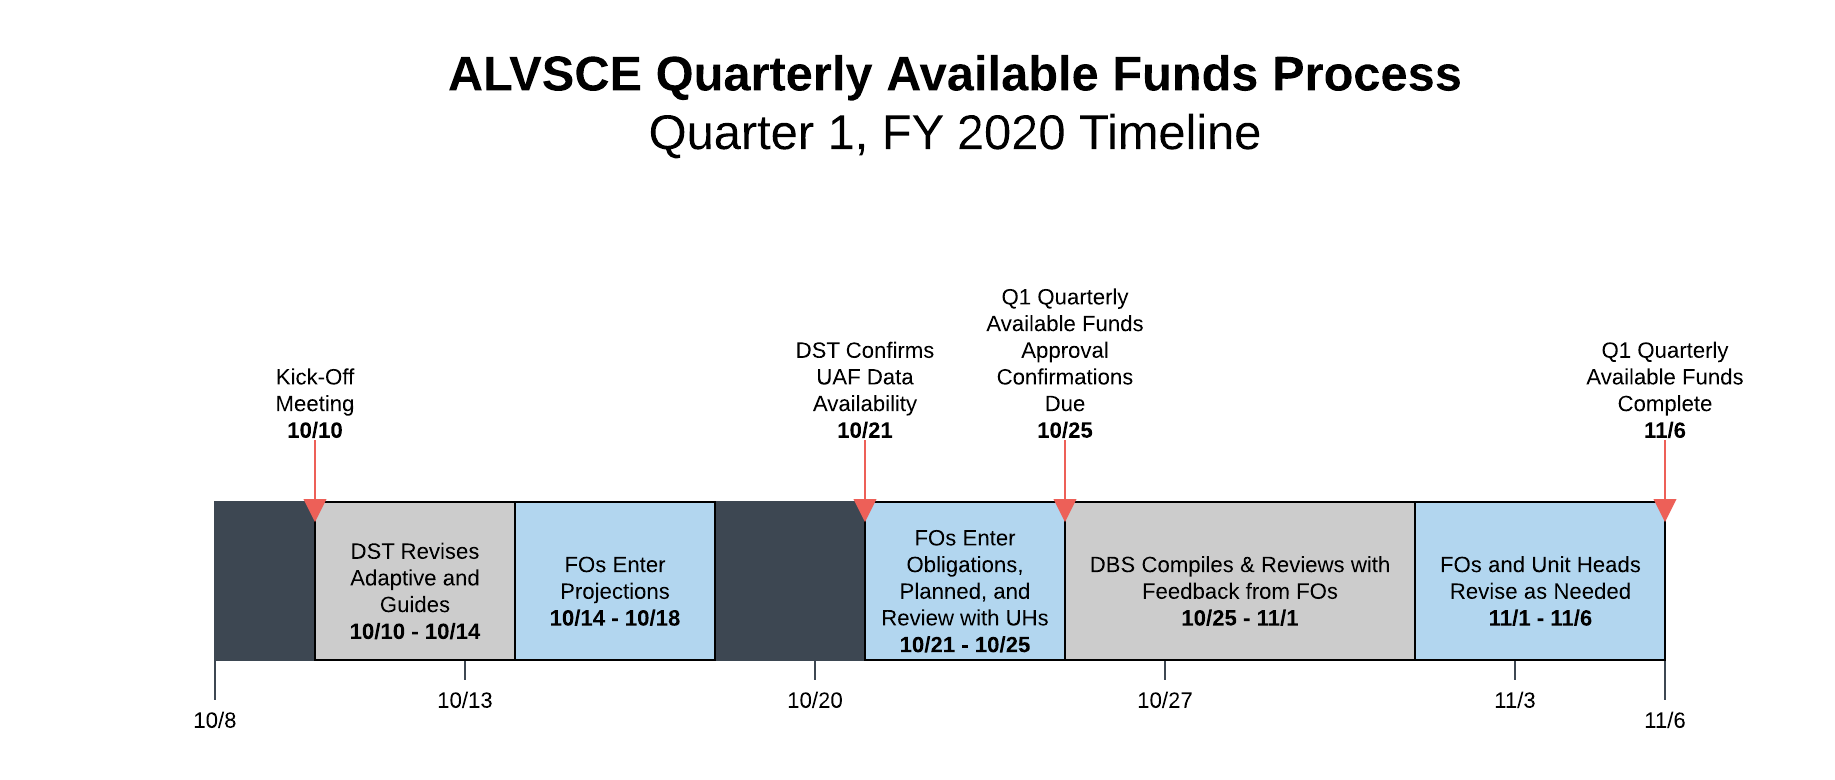 ALVSCE Quarterly Available Funds - Timeline